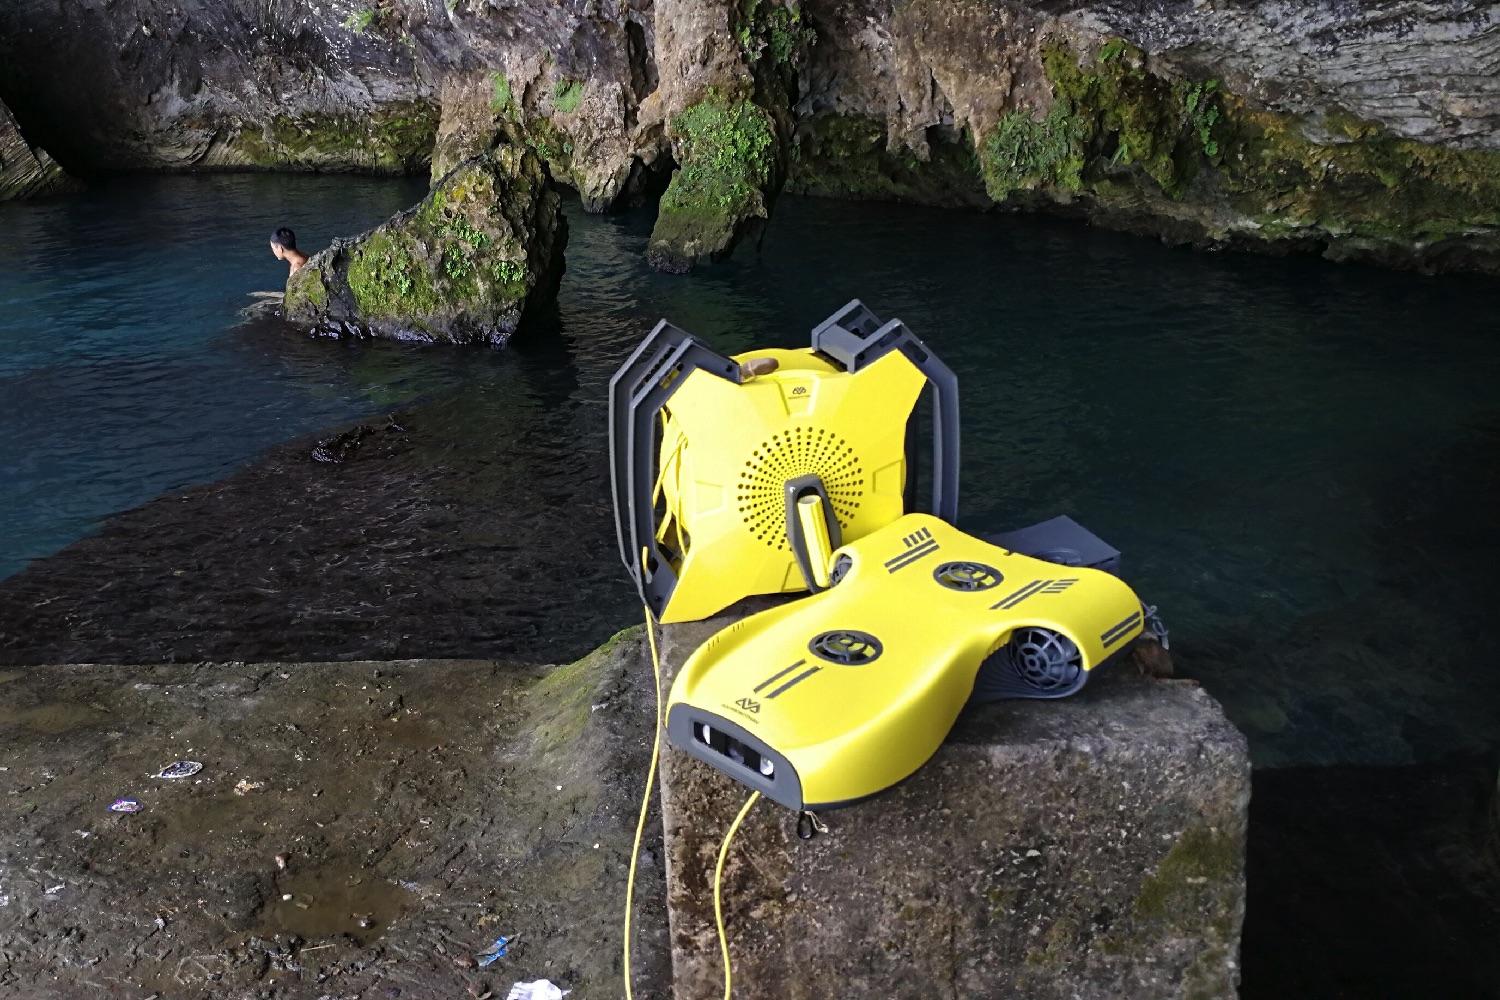 Nemo Underwater Drone 4K Footage From the Deep | Digital Trends